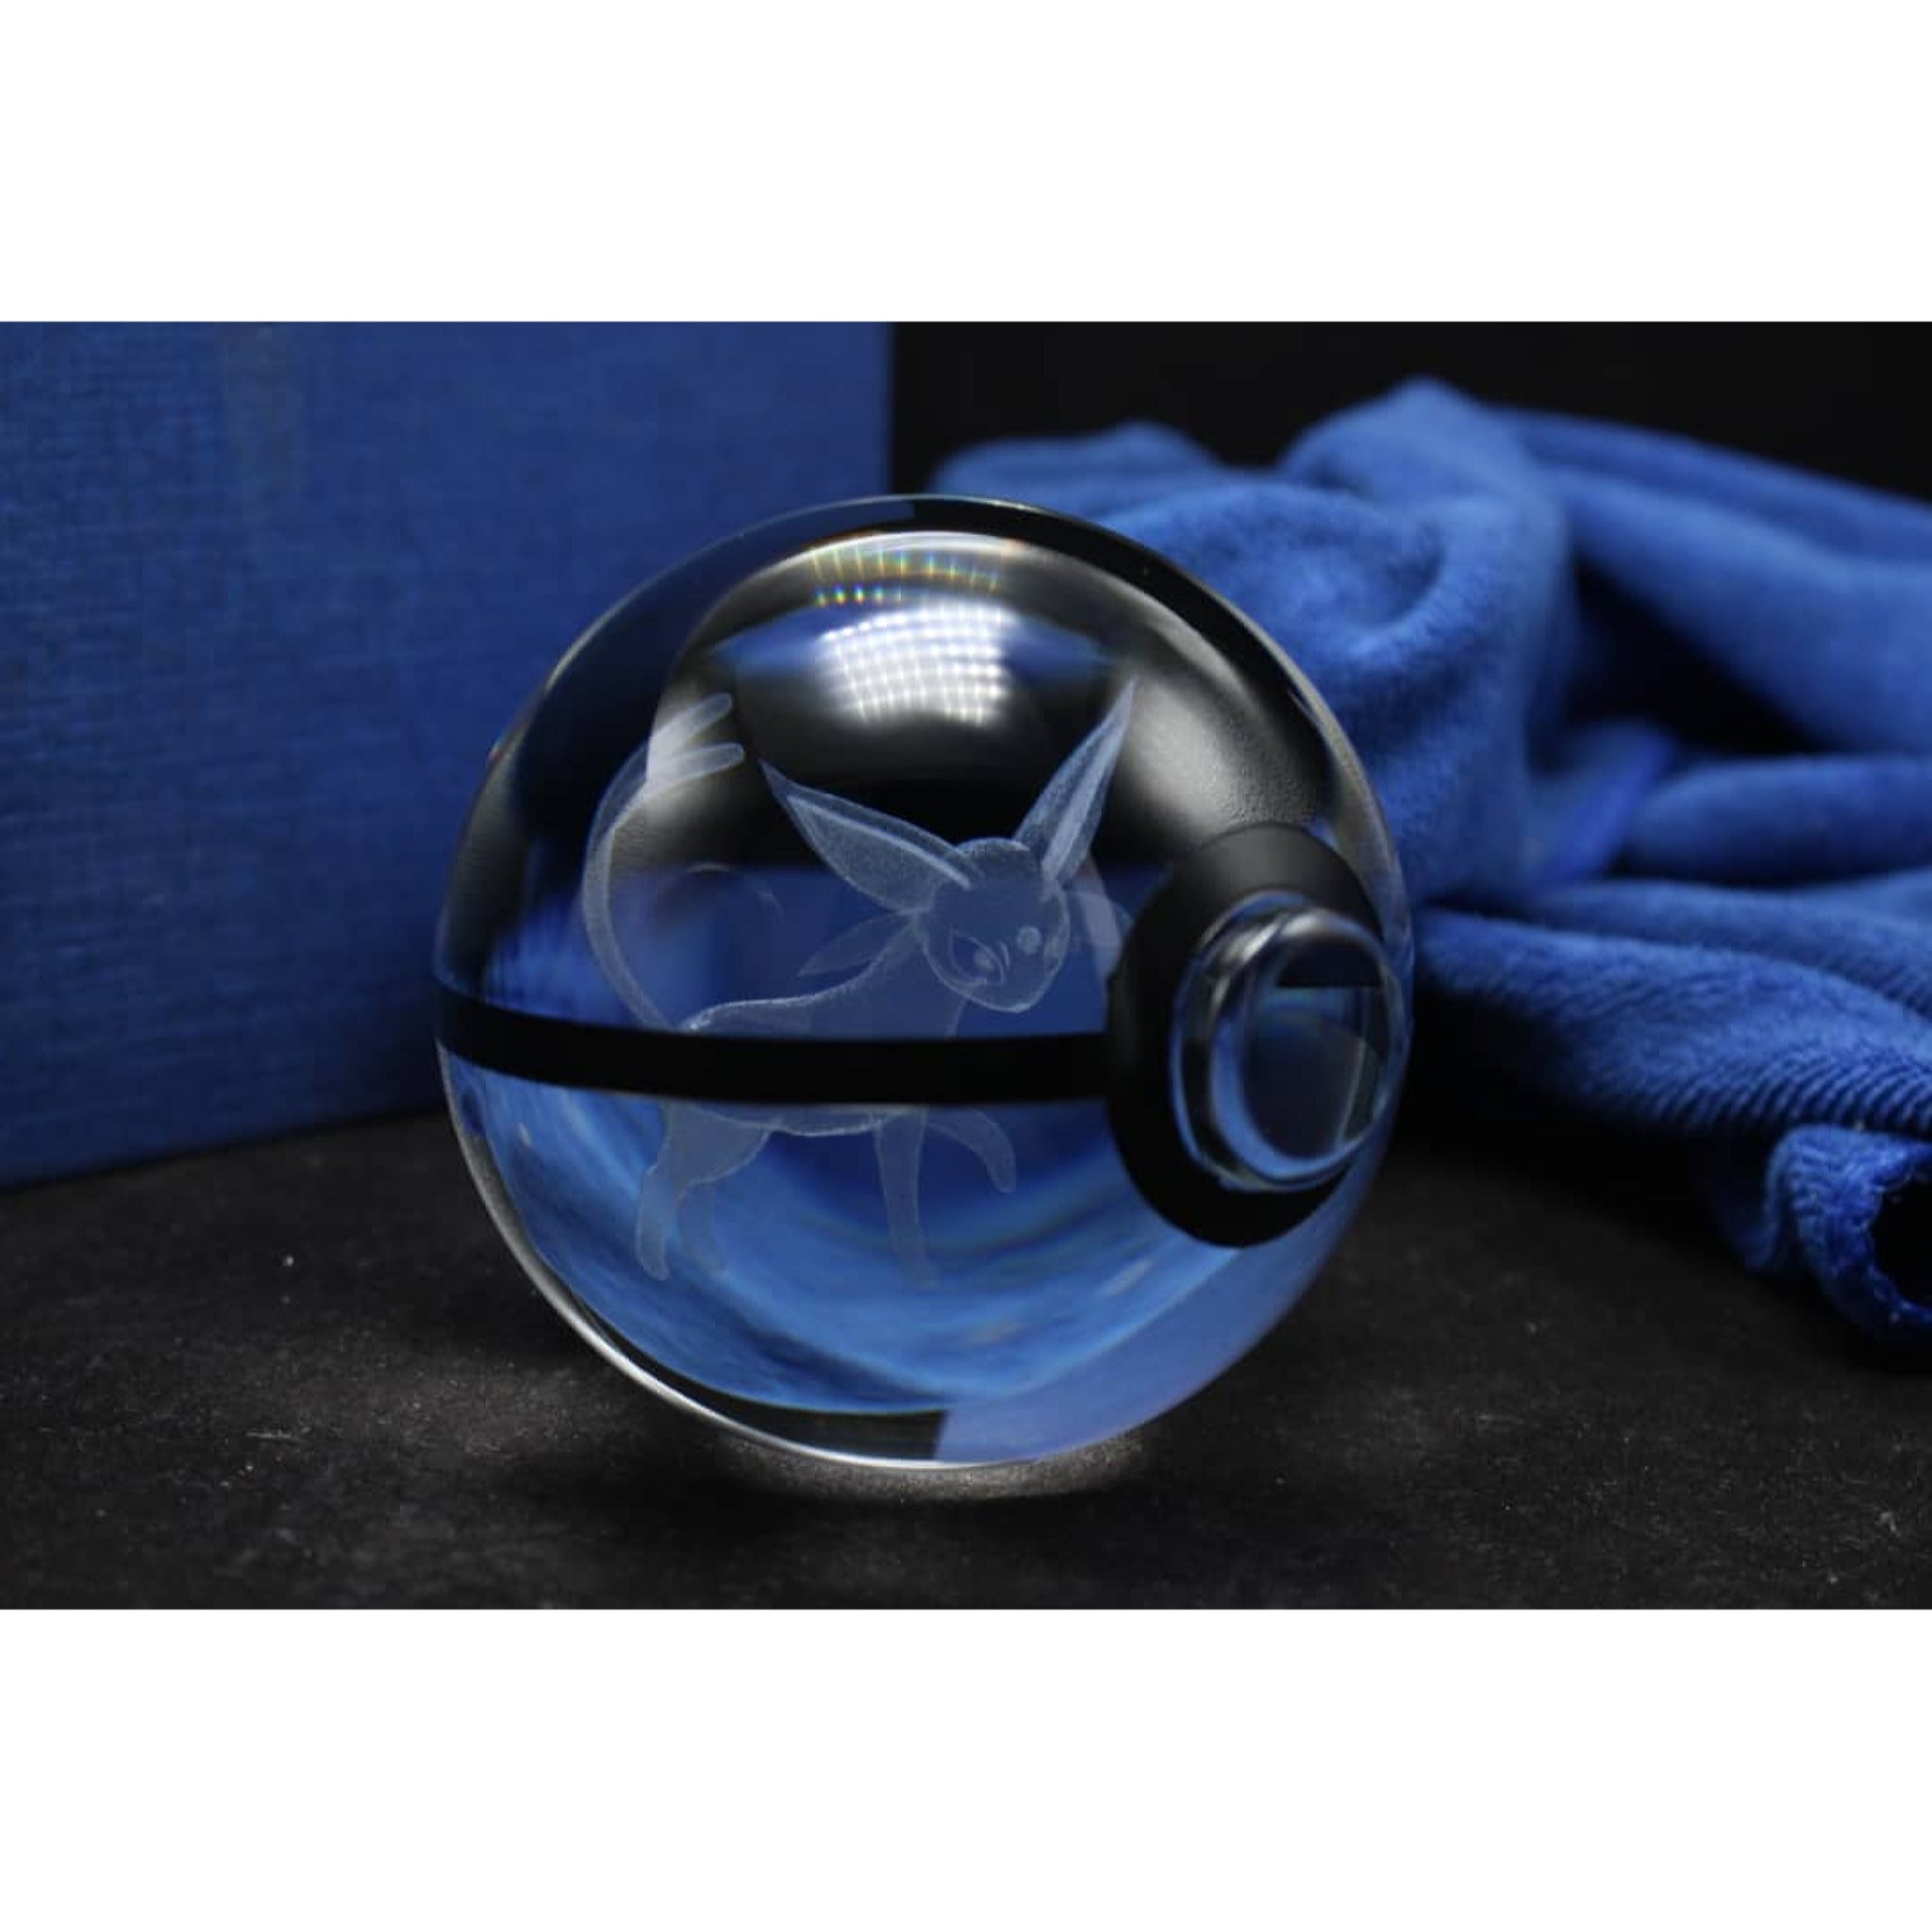 Espeon Pokemon Glass Crystal Pokeball 8 with Light-Up LED Base Ornament 80mm XL Size